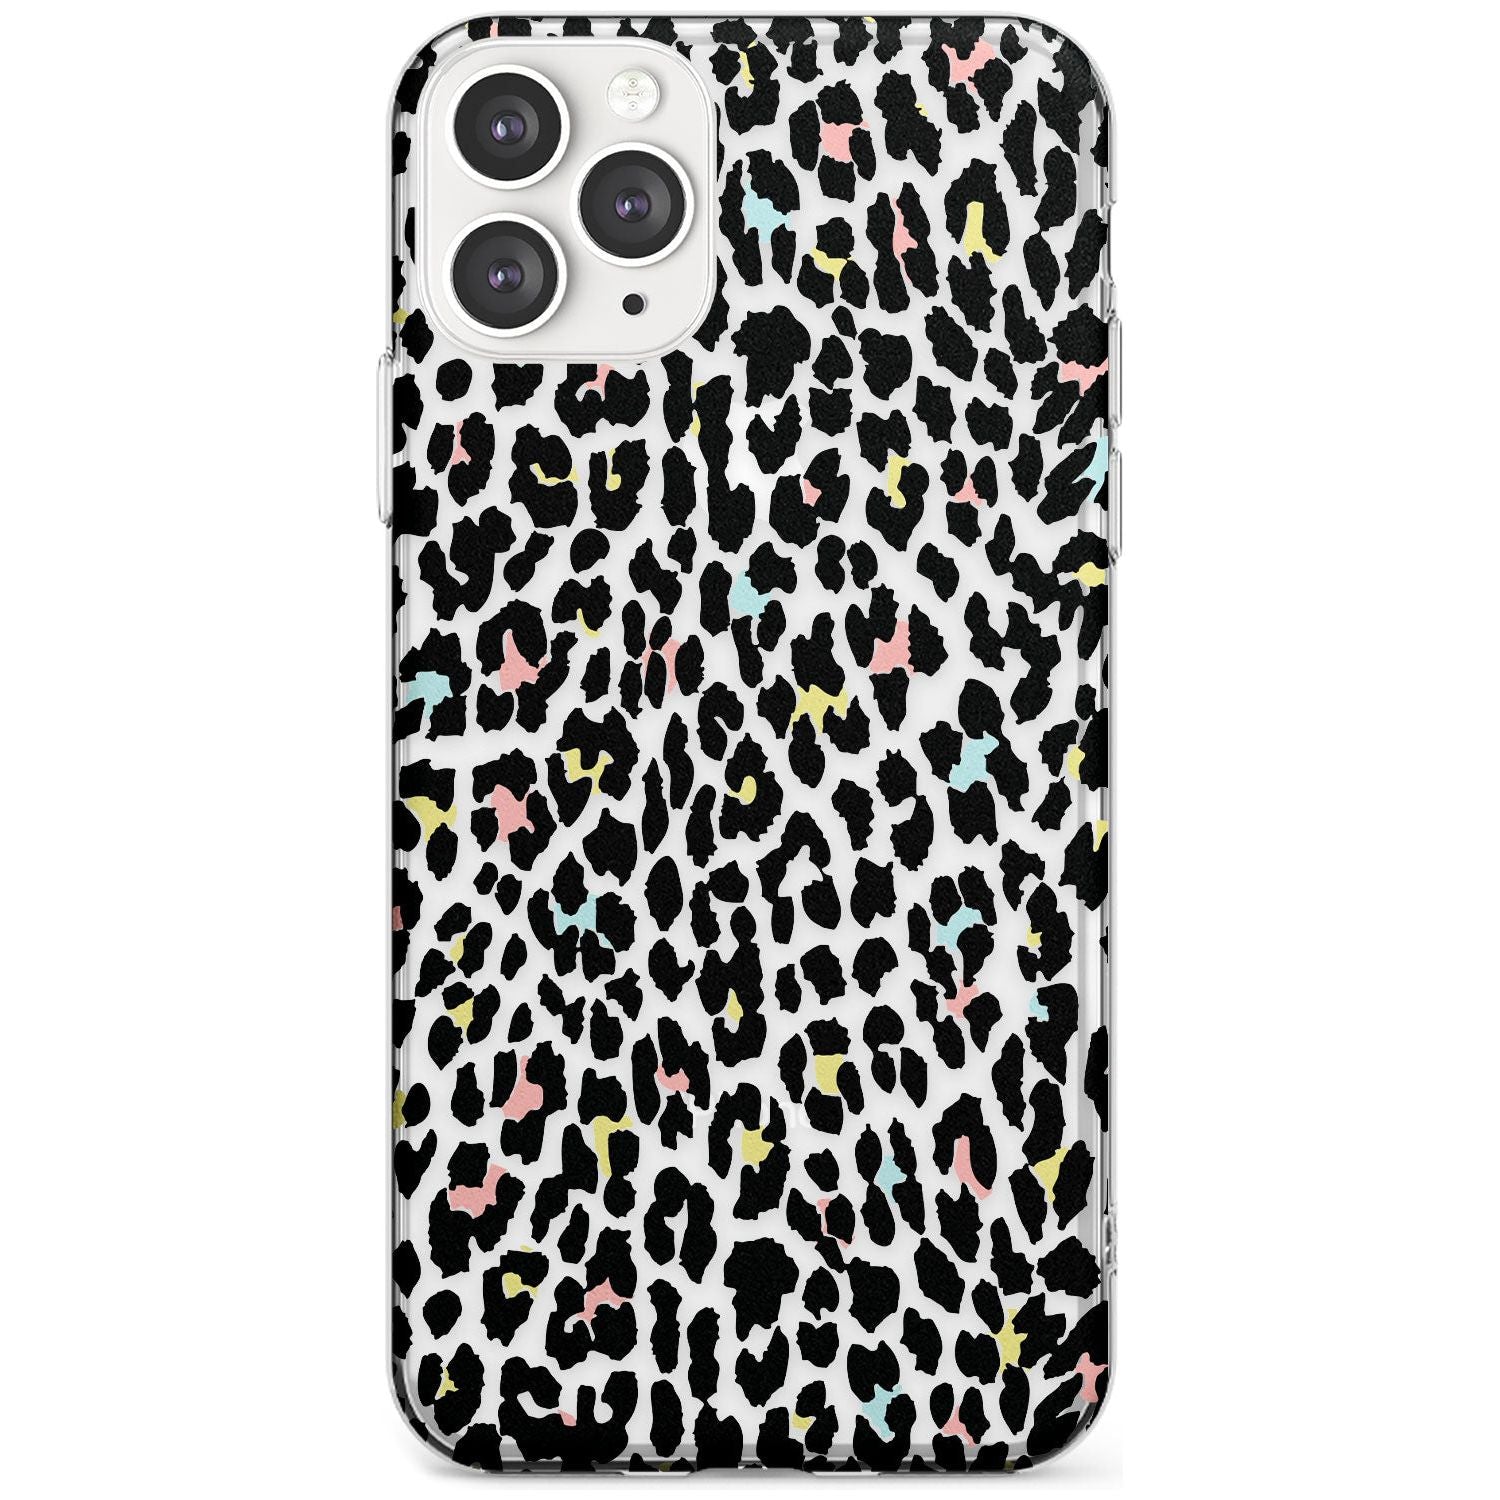 Mixed Pastels Leopard Print - Transparent Slim TPU Phone Case for iPhone 11 Pro Max